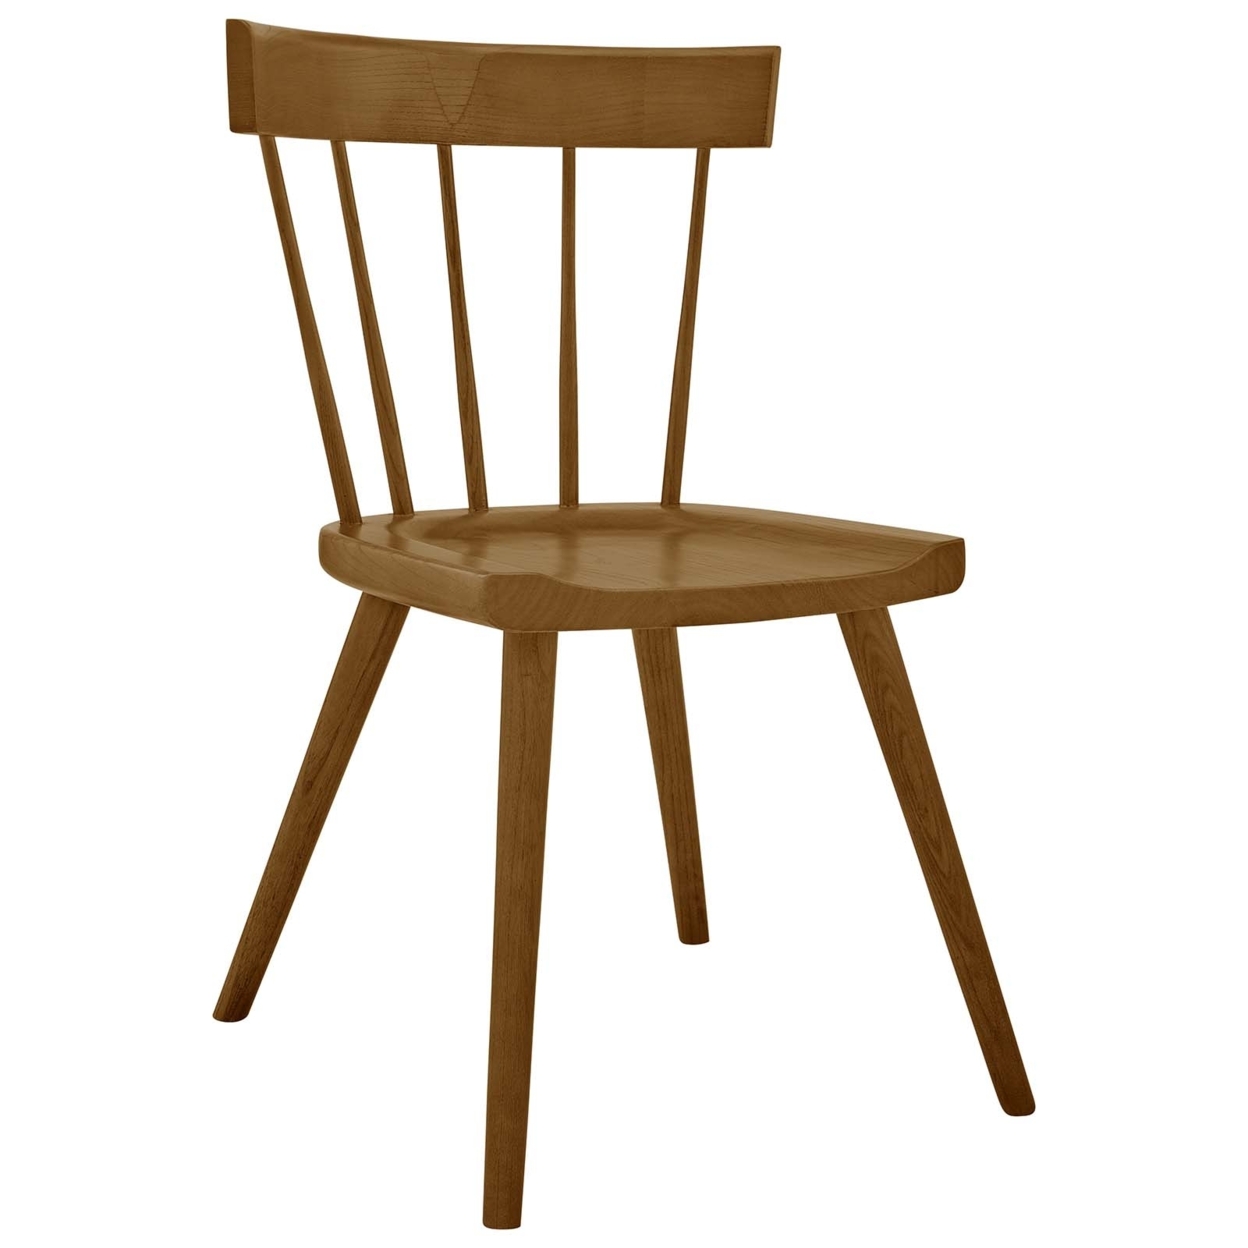 Sutter Wood Dining Side Chair, Walnut